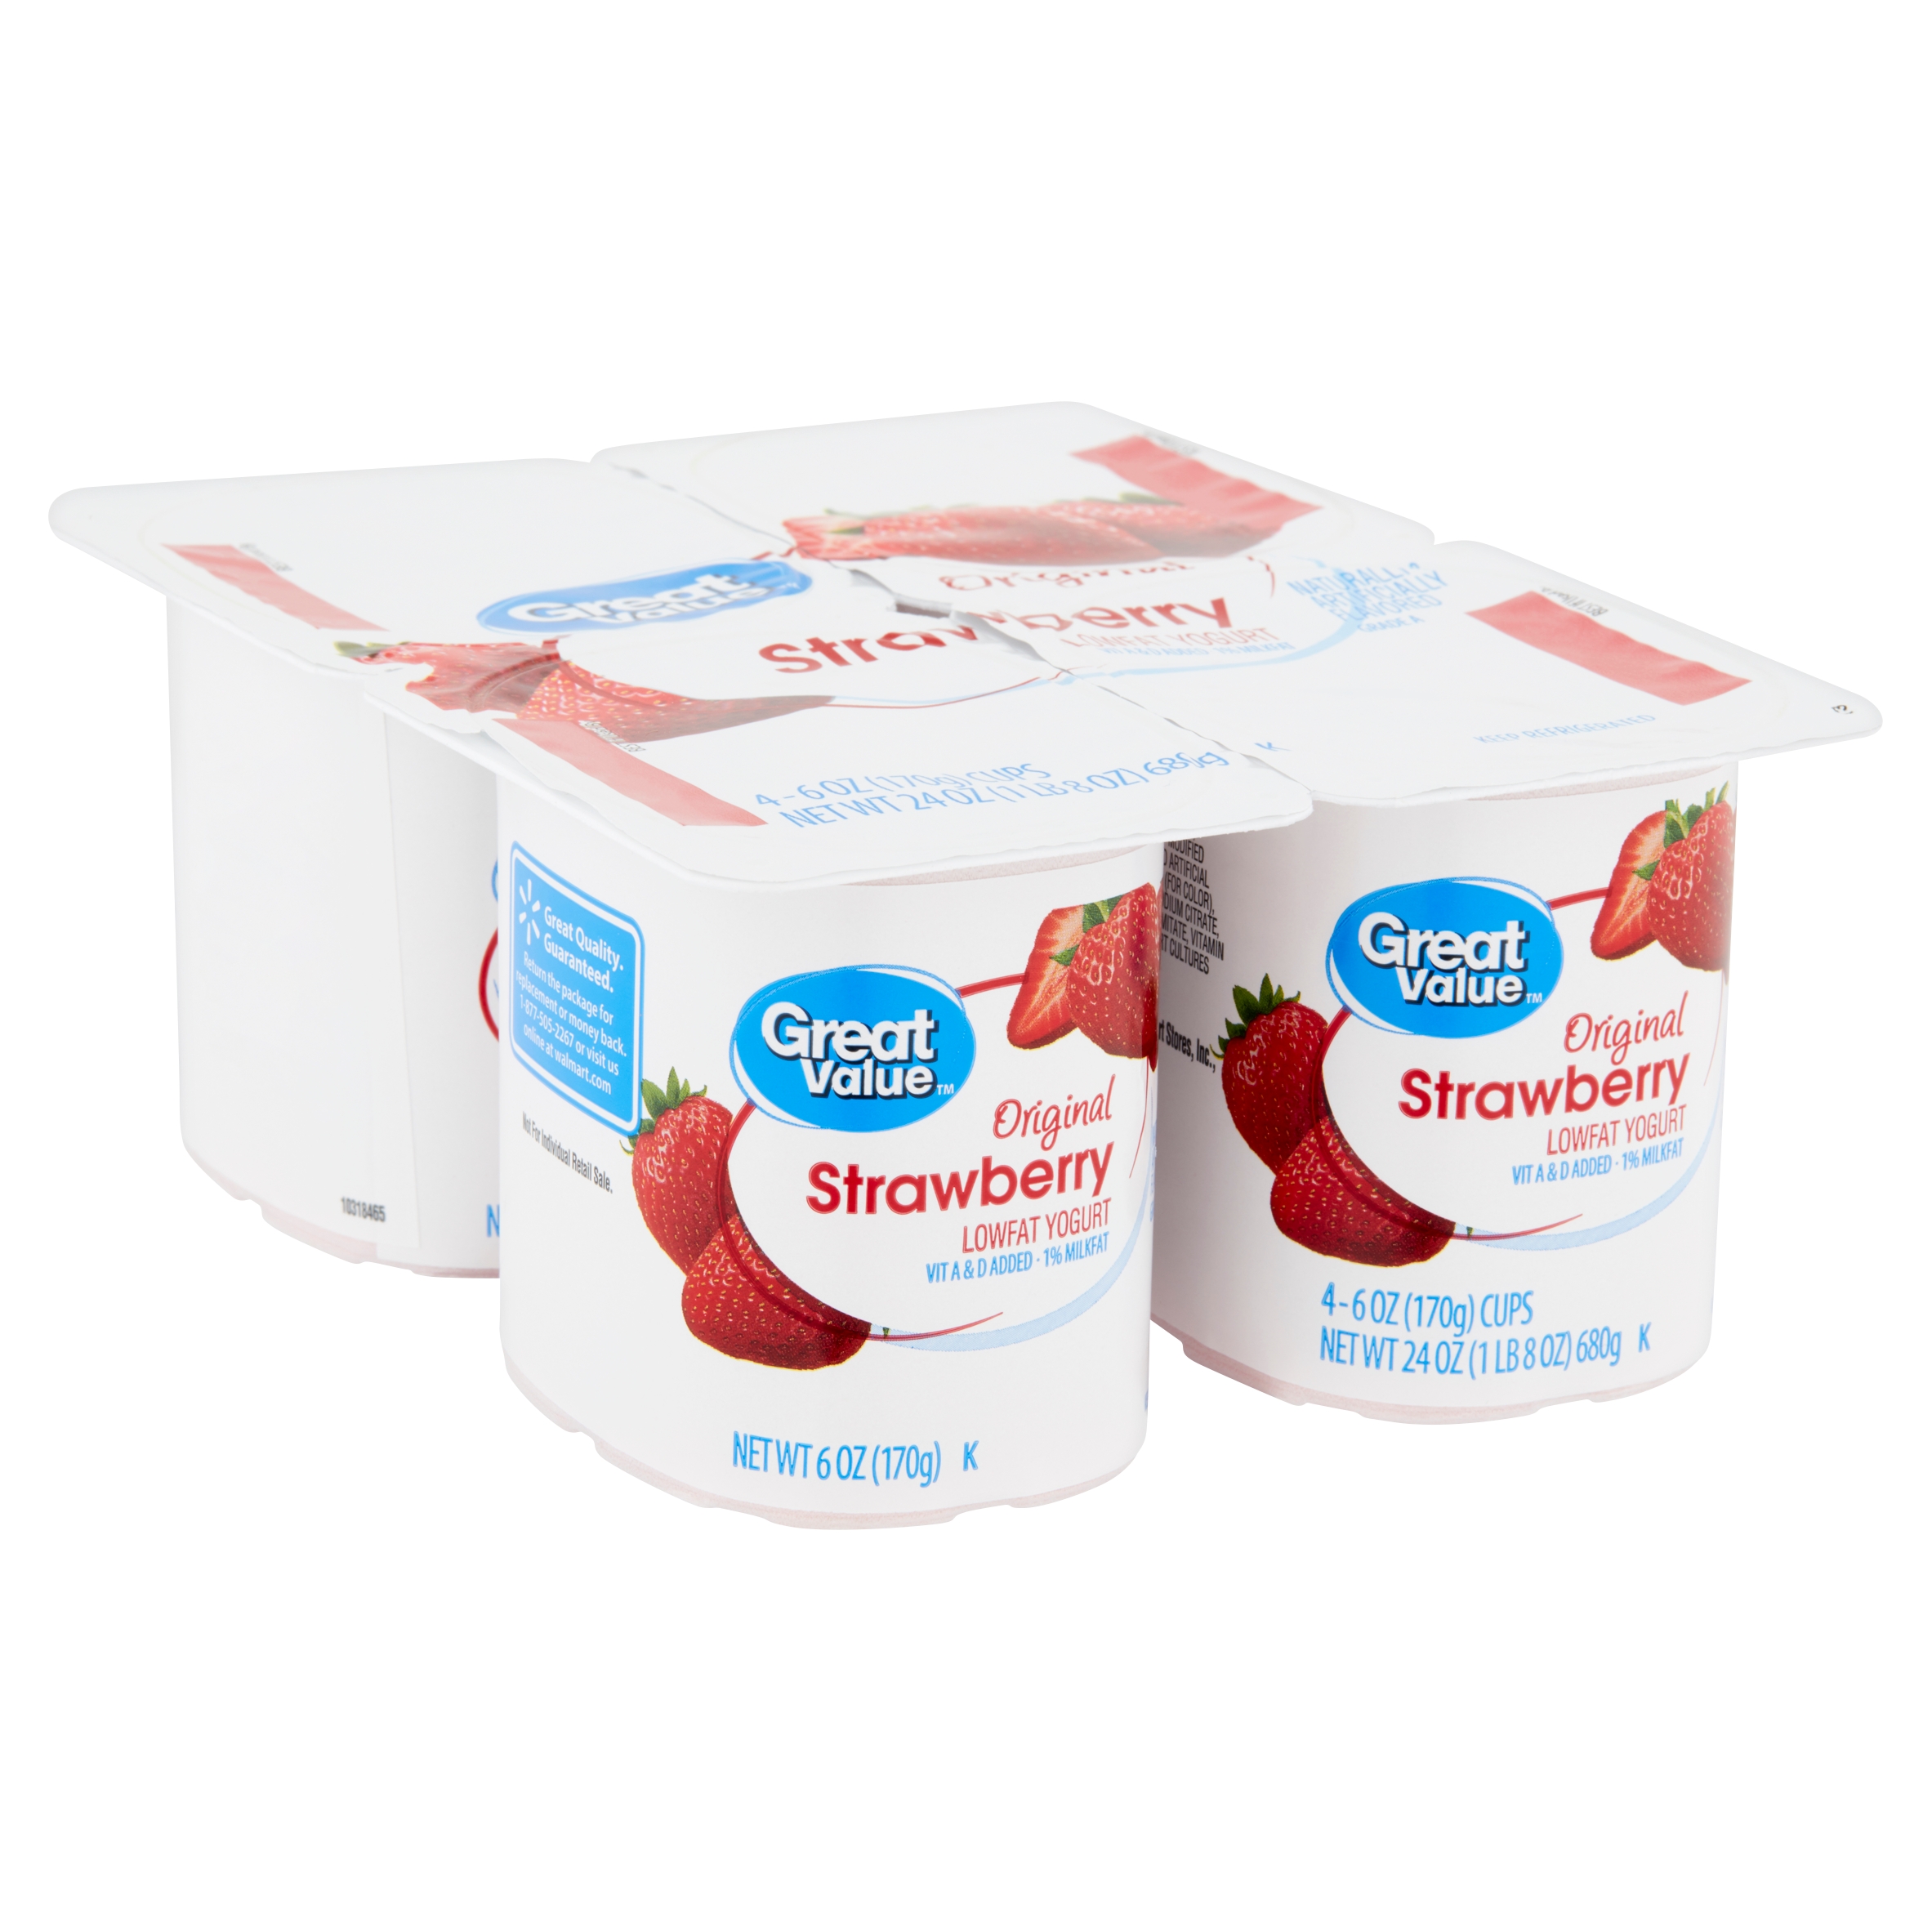 Great Value Original Strawberry Lowfat Yogurt, 6 Oz, 4 Count Image